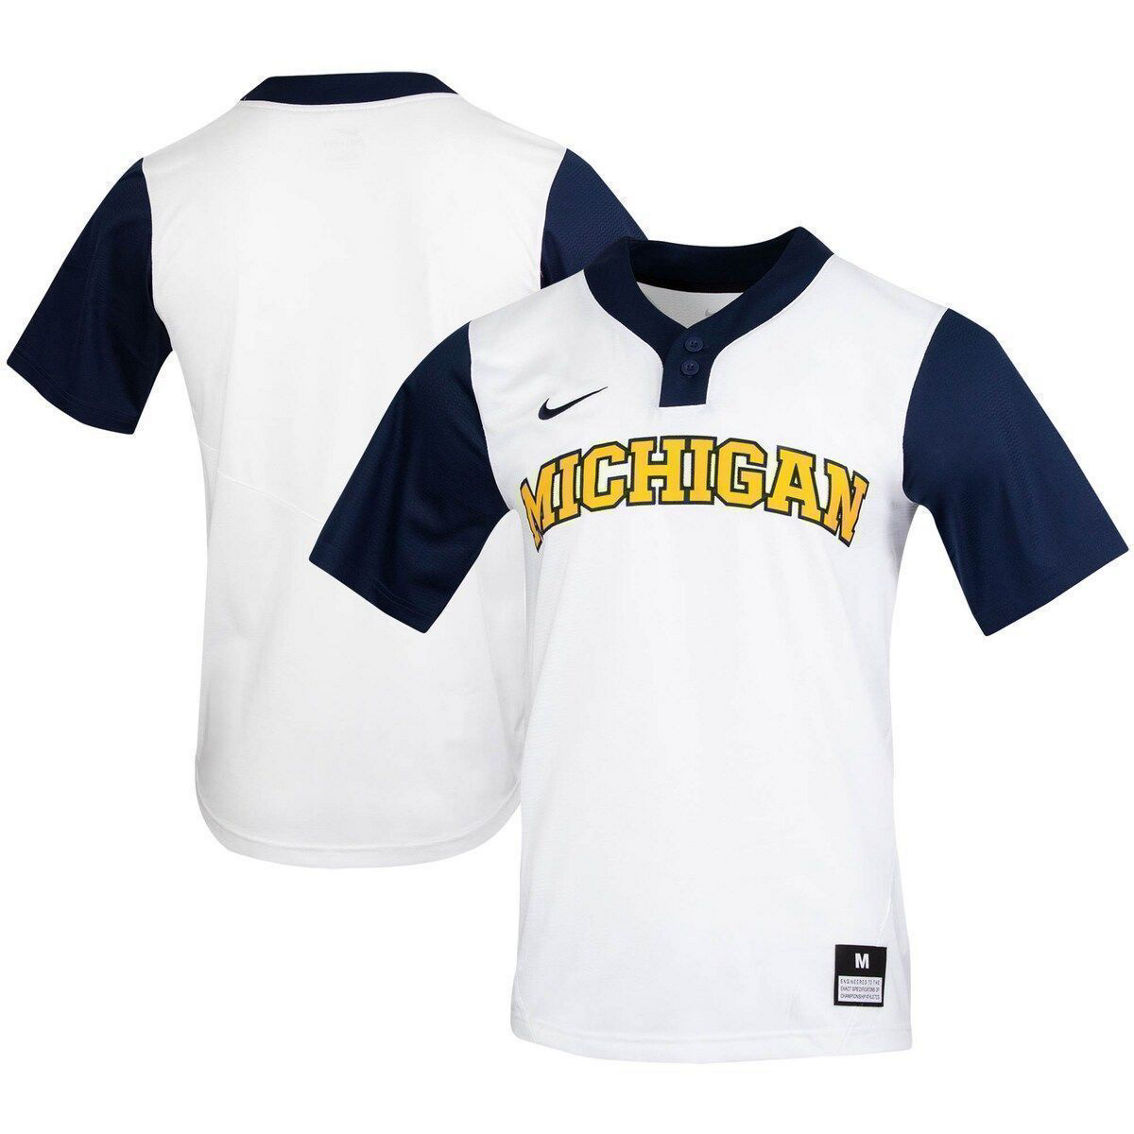 Nike Unisex White Michigan Wolverines Replica Softball Jersey - Image 2 of 4